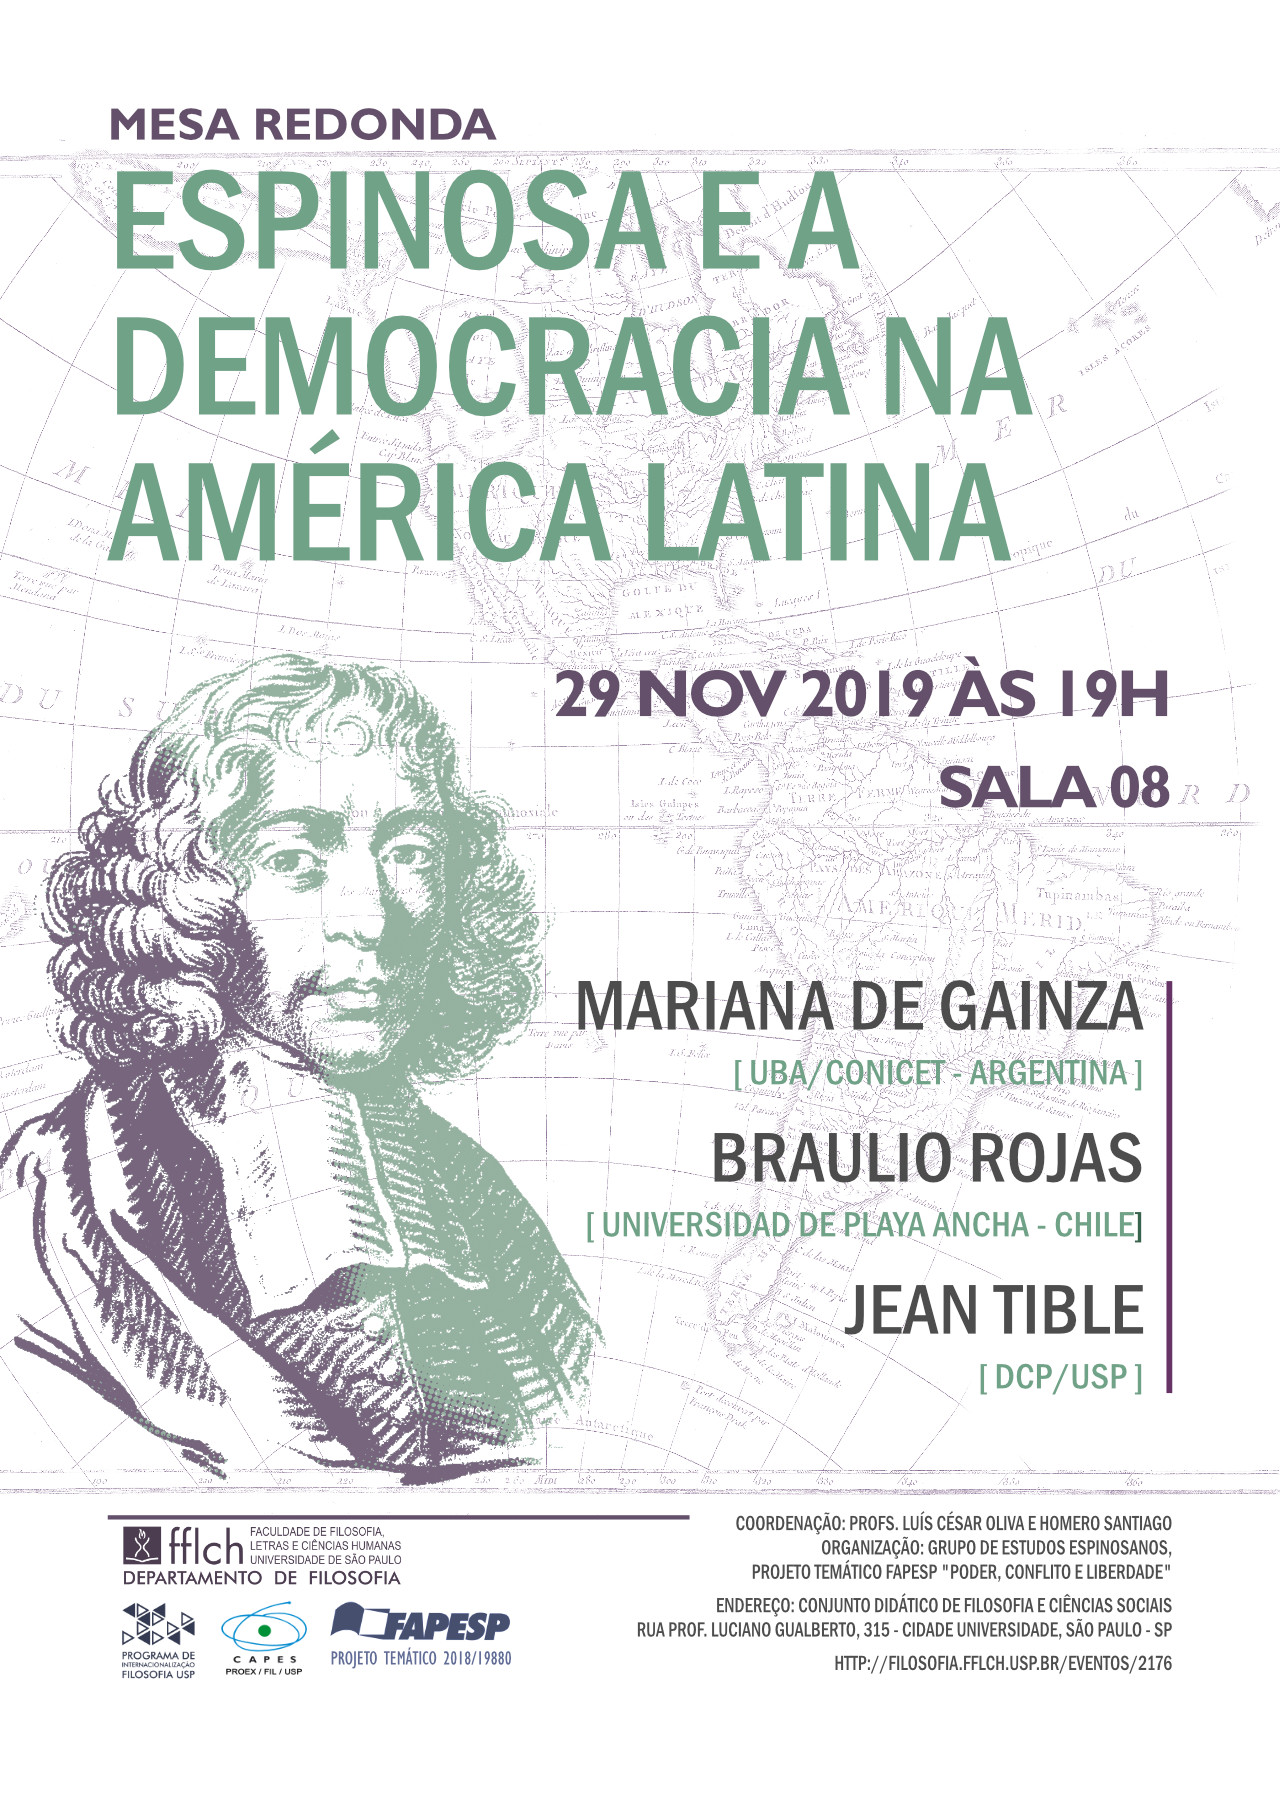 2019_espinosa_democracia_america_latina.jpg